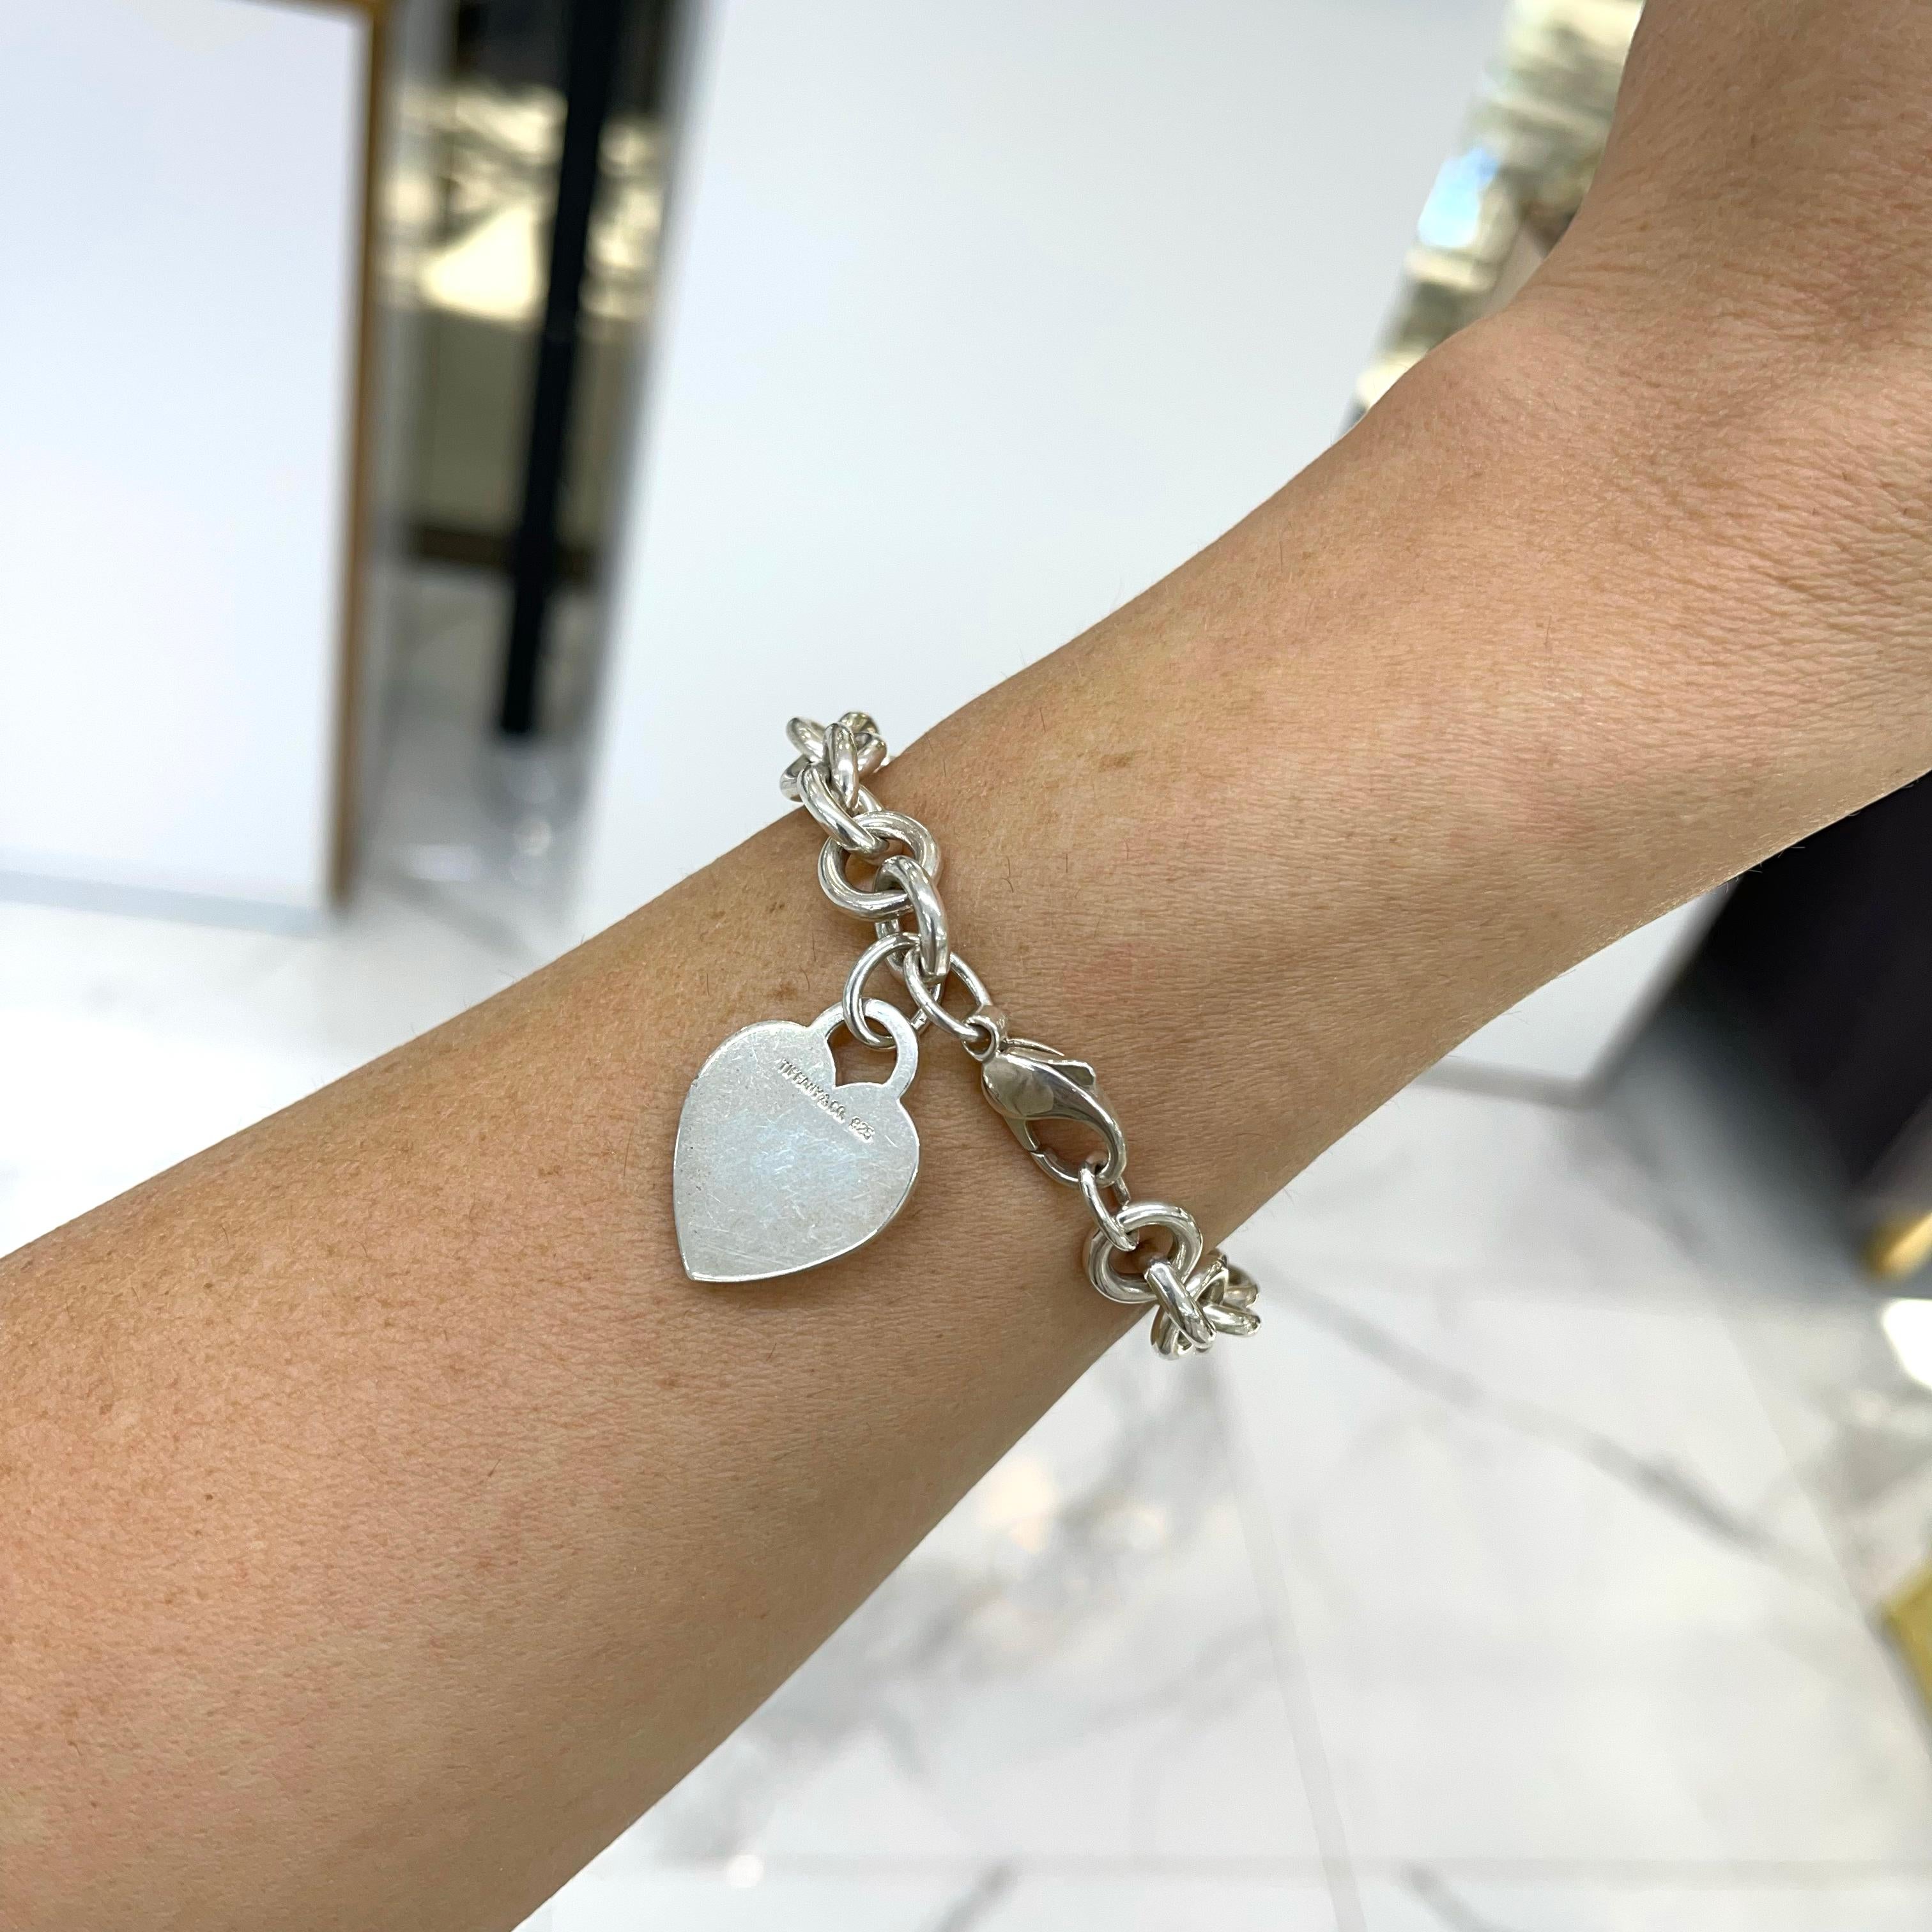 tiffany and co heart tag bracelet